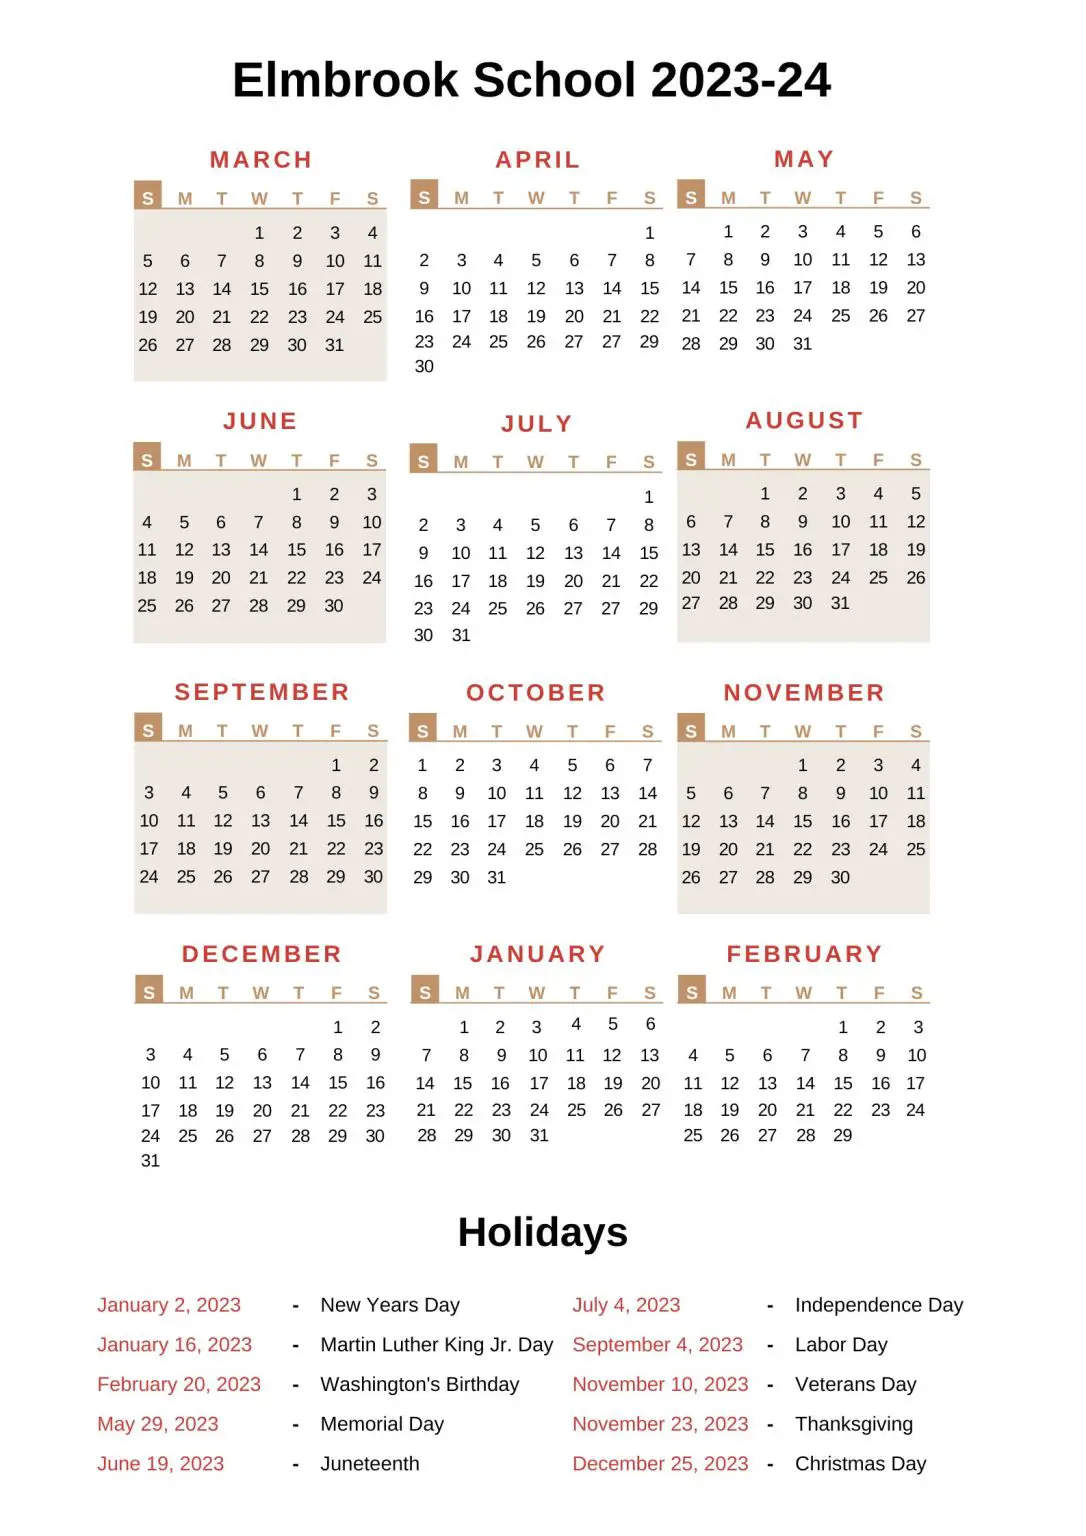 Elmbrook Schools Calendar [ESD] 202324 with Holidays